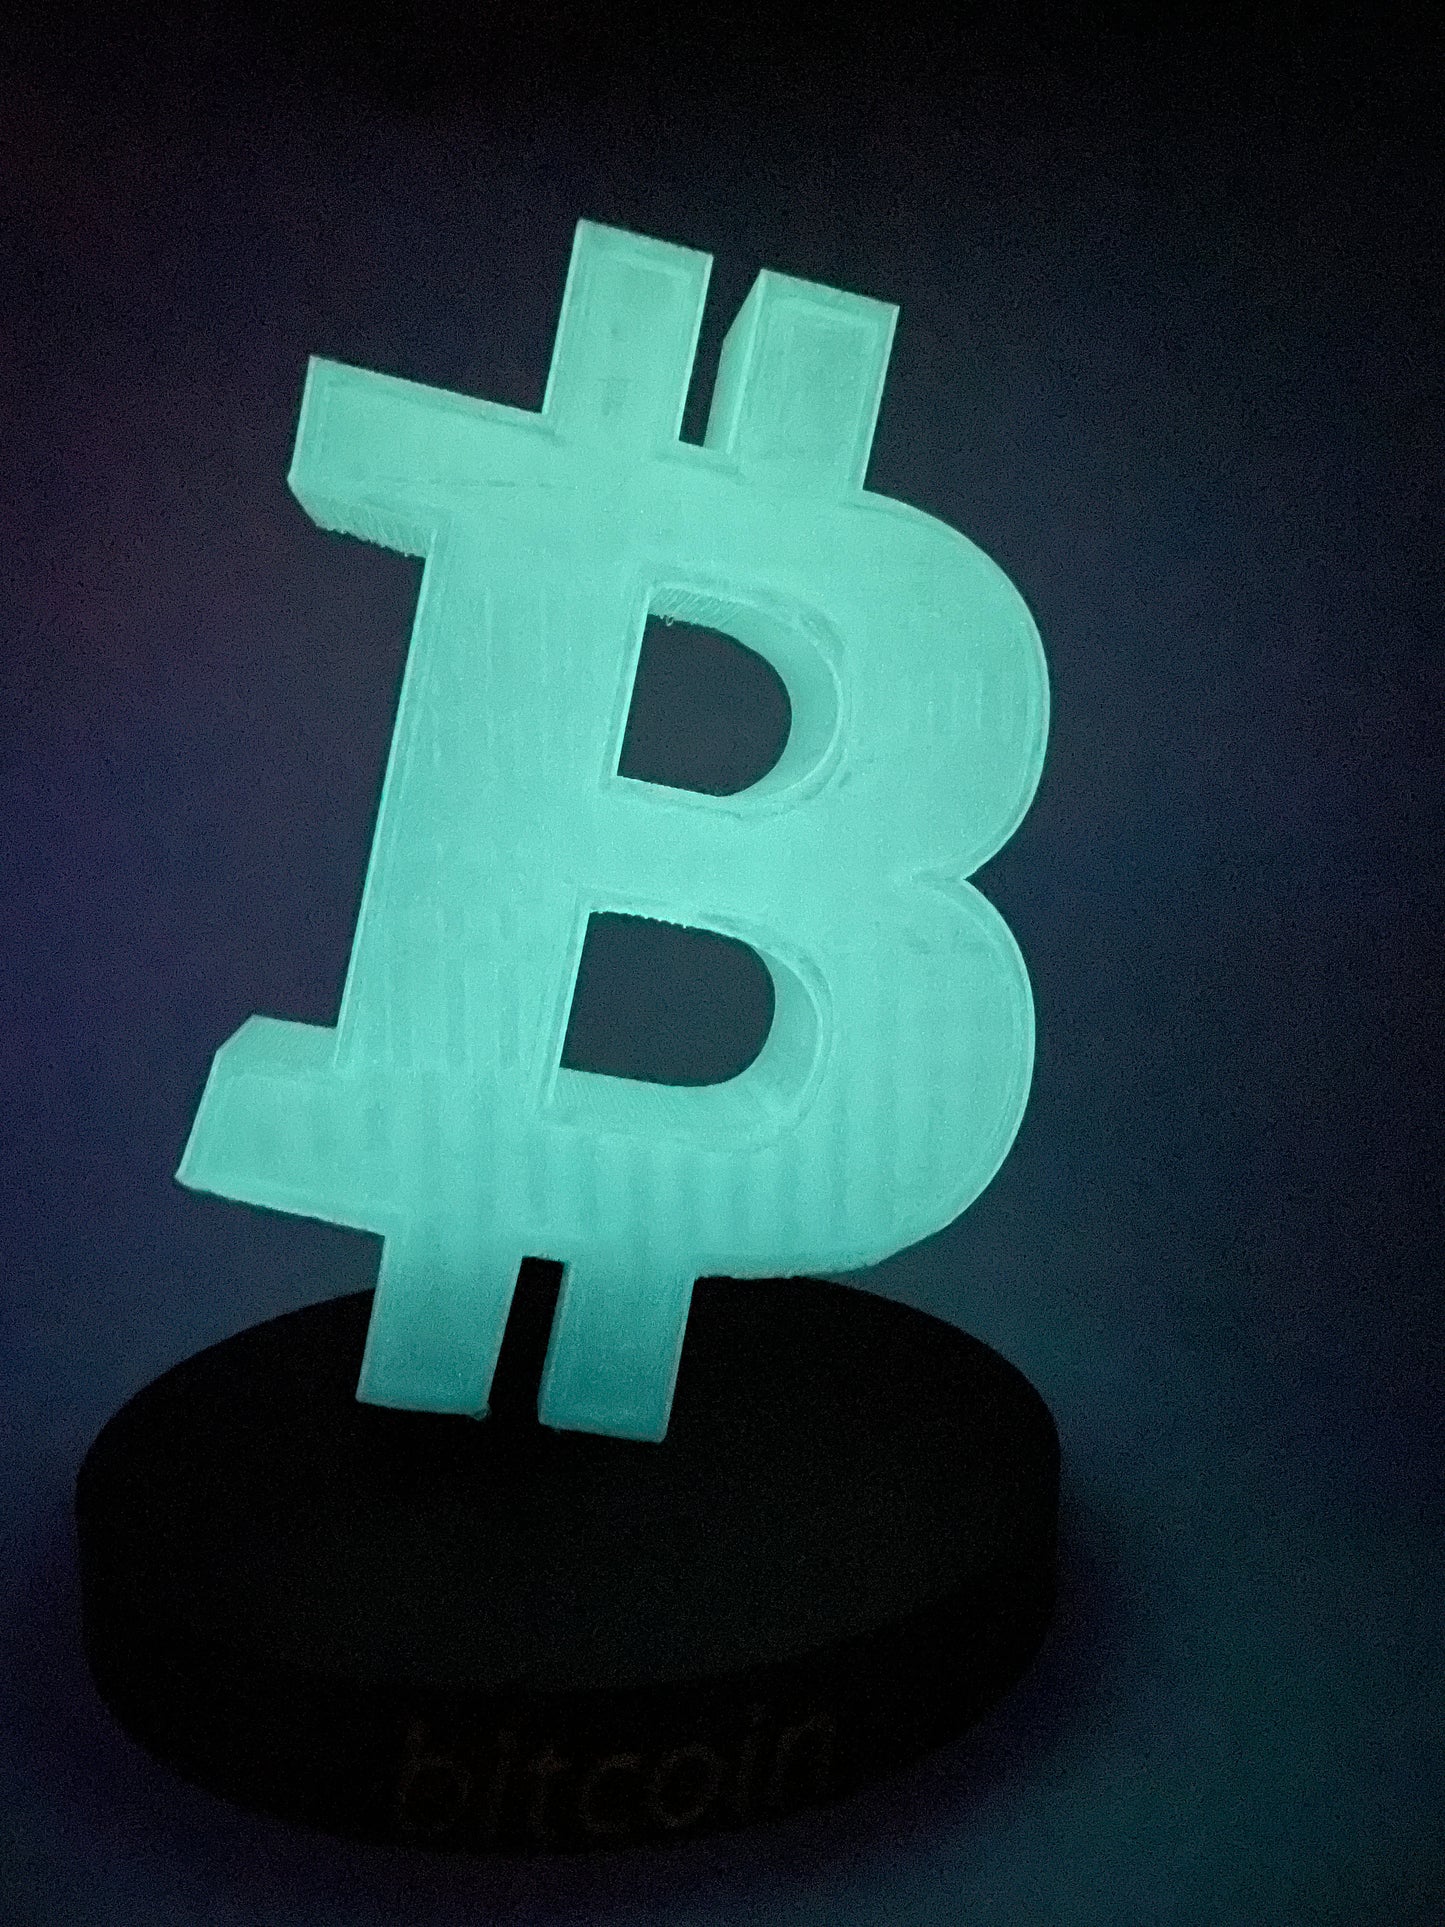 3D-Druck Bitcoin-logo mit Sockel, fluoreszierend